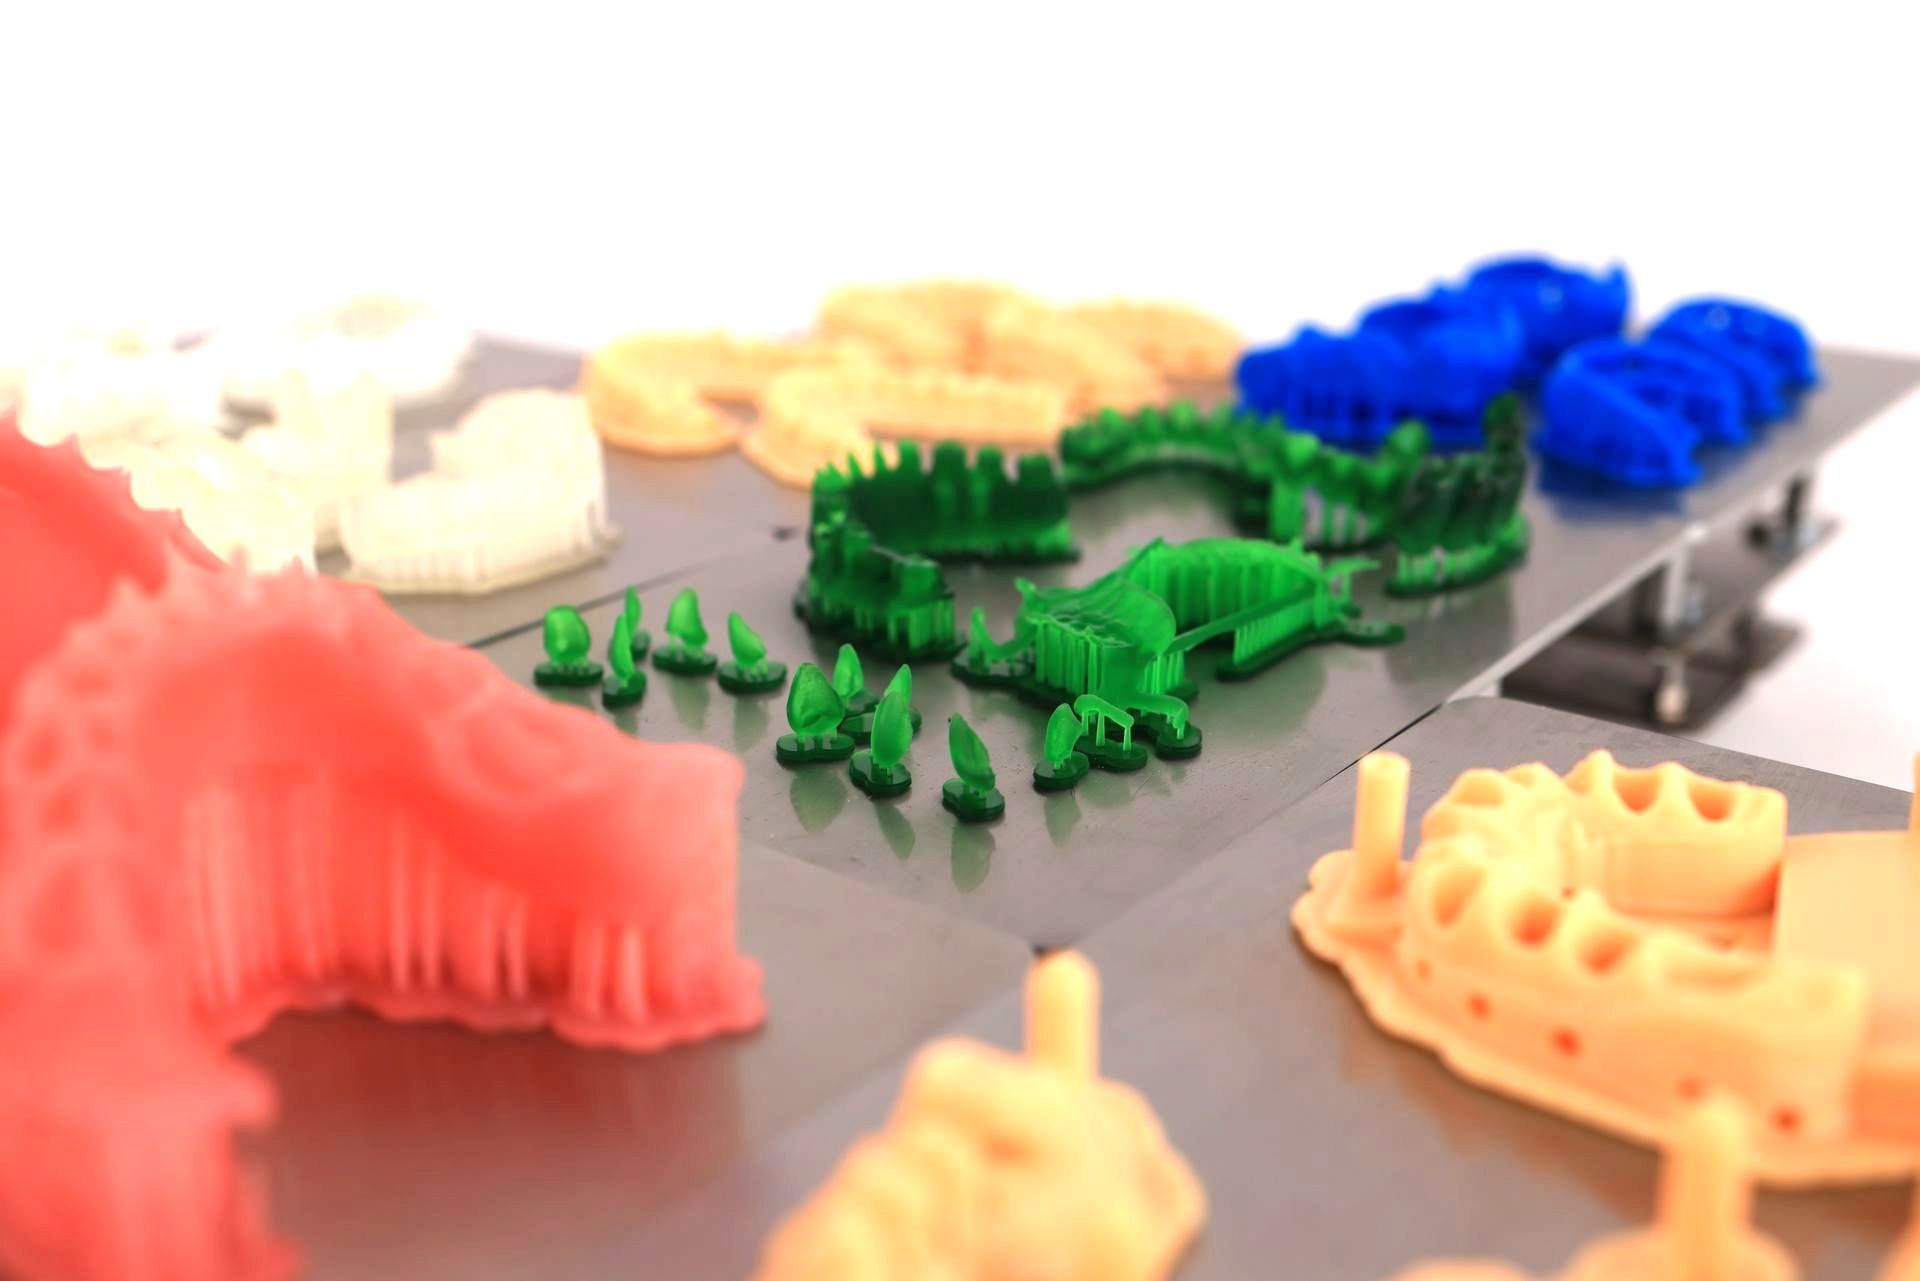 3D Printed Dental Parts